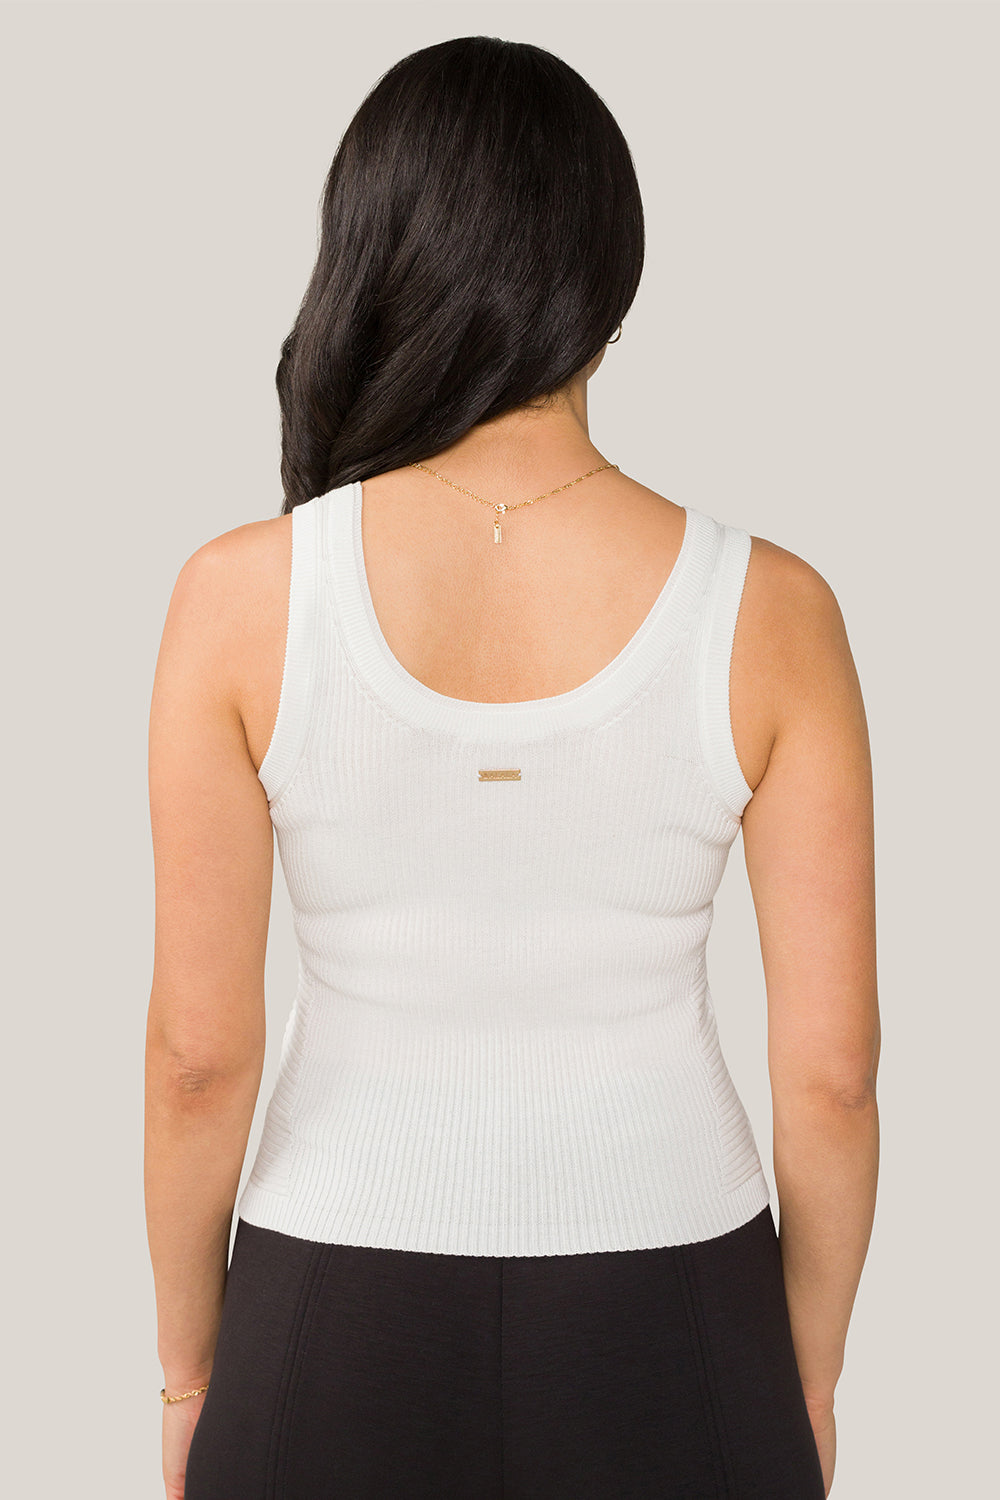 Alala women's scoop neck tank top in white